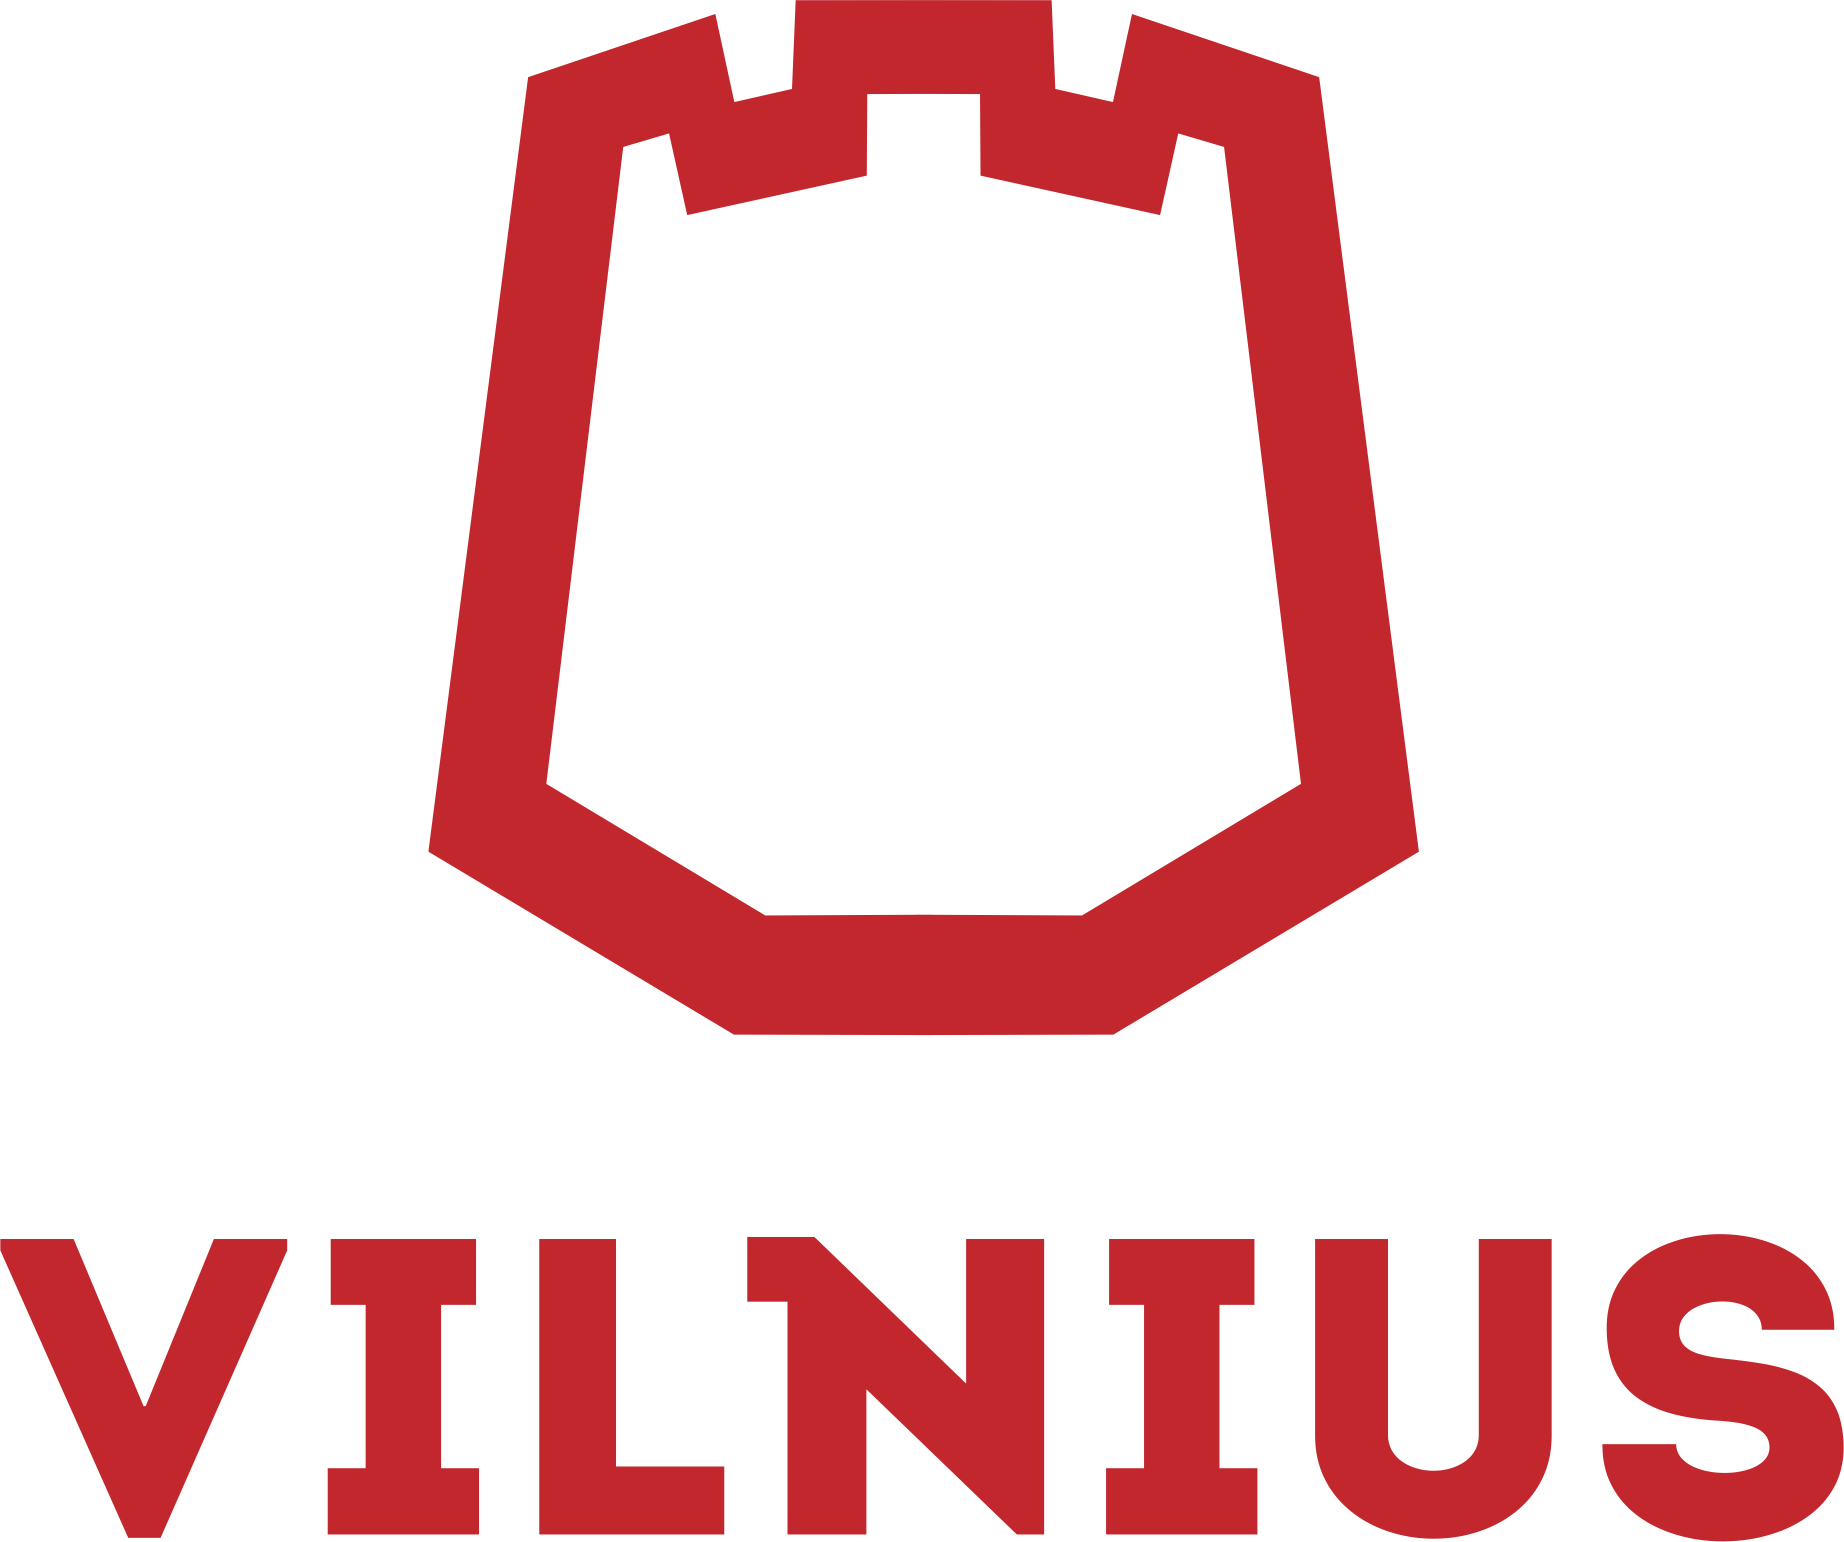 VILNIUS_RED_TRANSPARENT_RGB.png